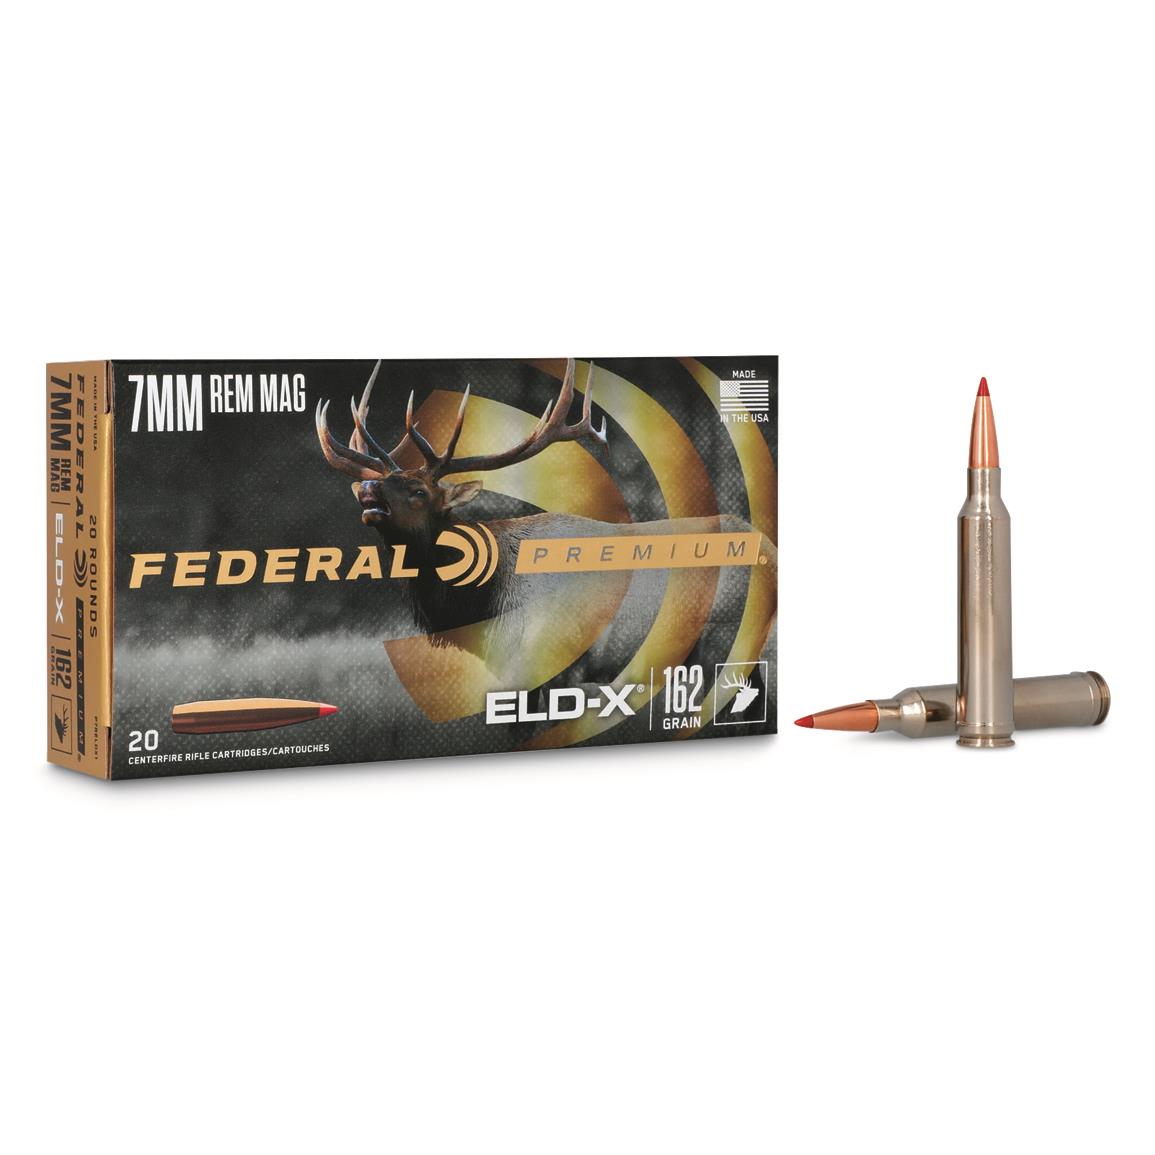 Federal Premium, 7mm Rem. Mag., ELD-X, 162 Grain, 20 Rounds